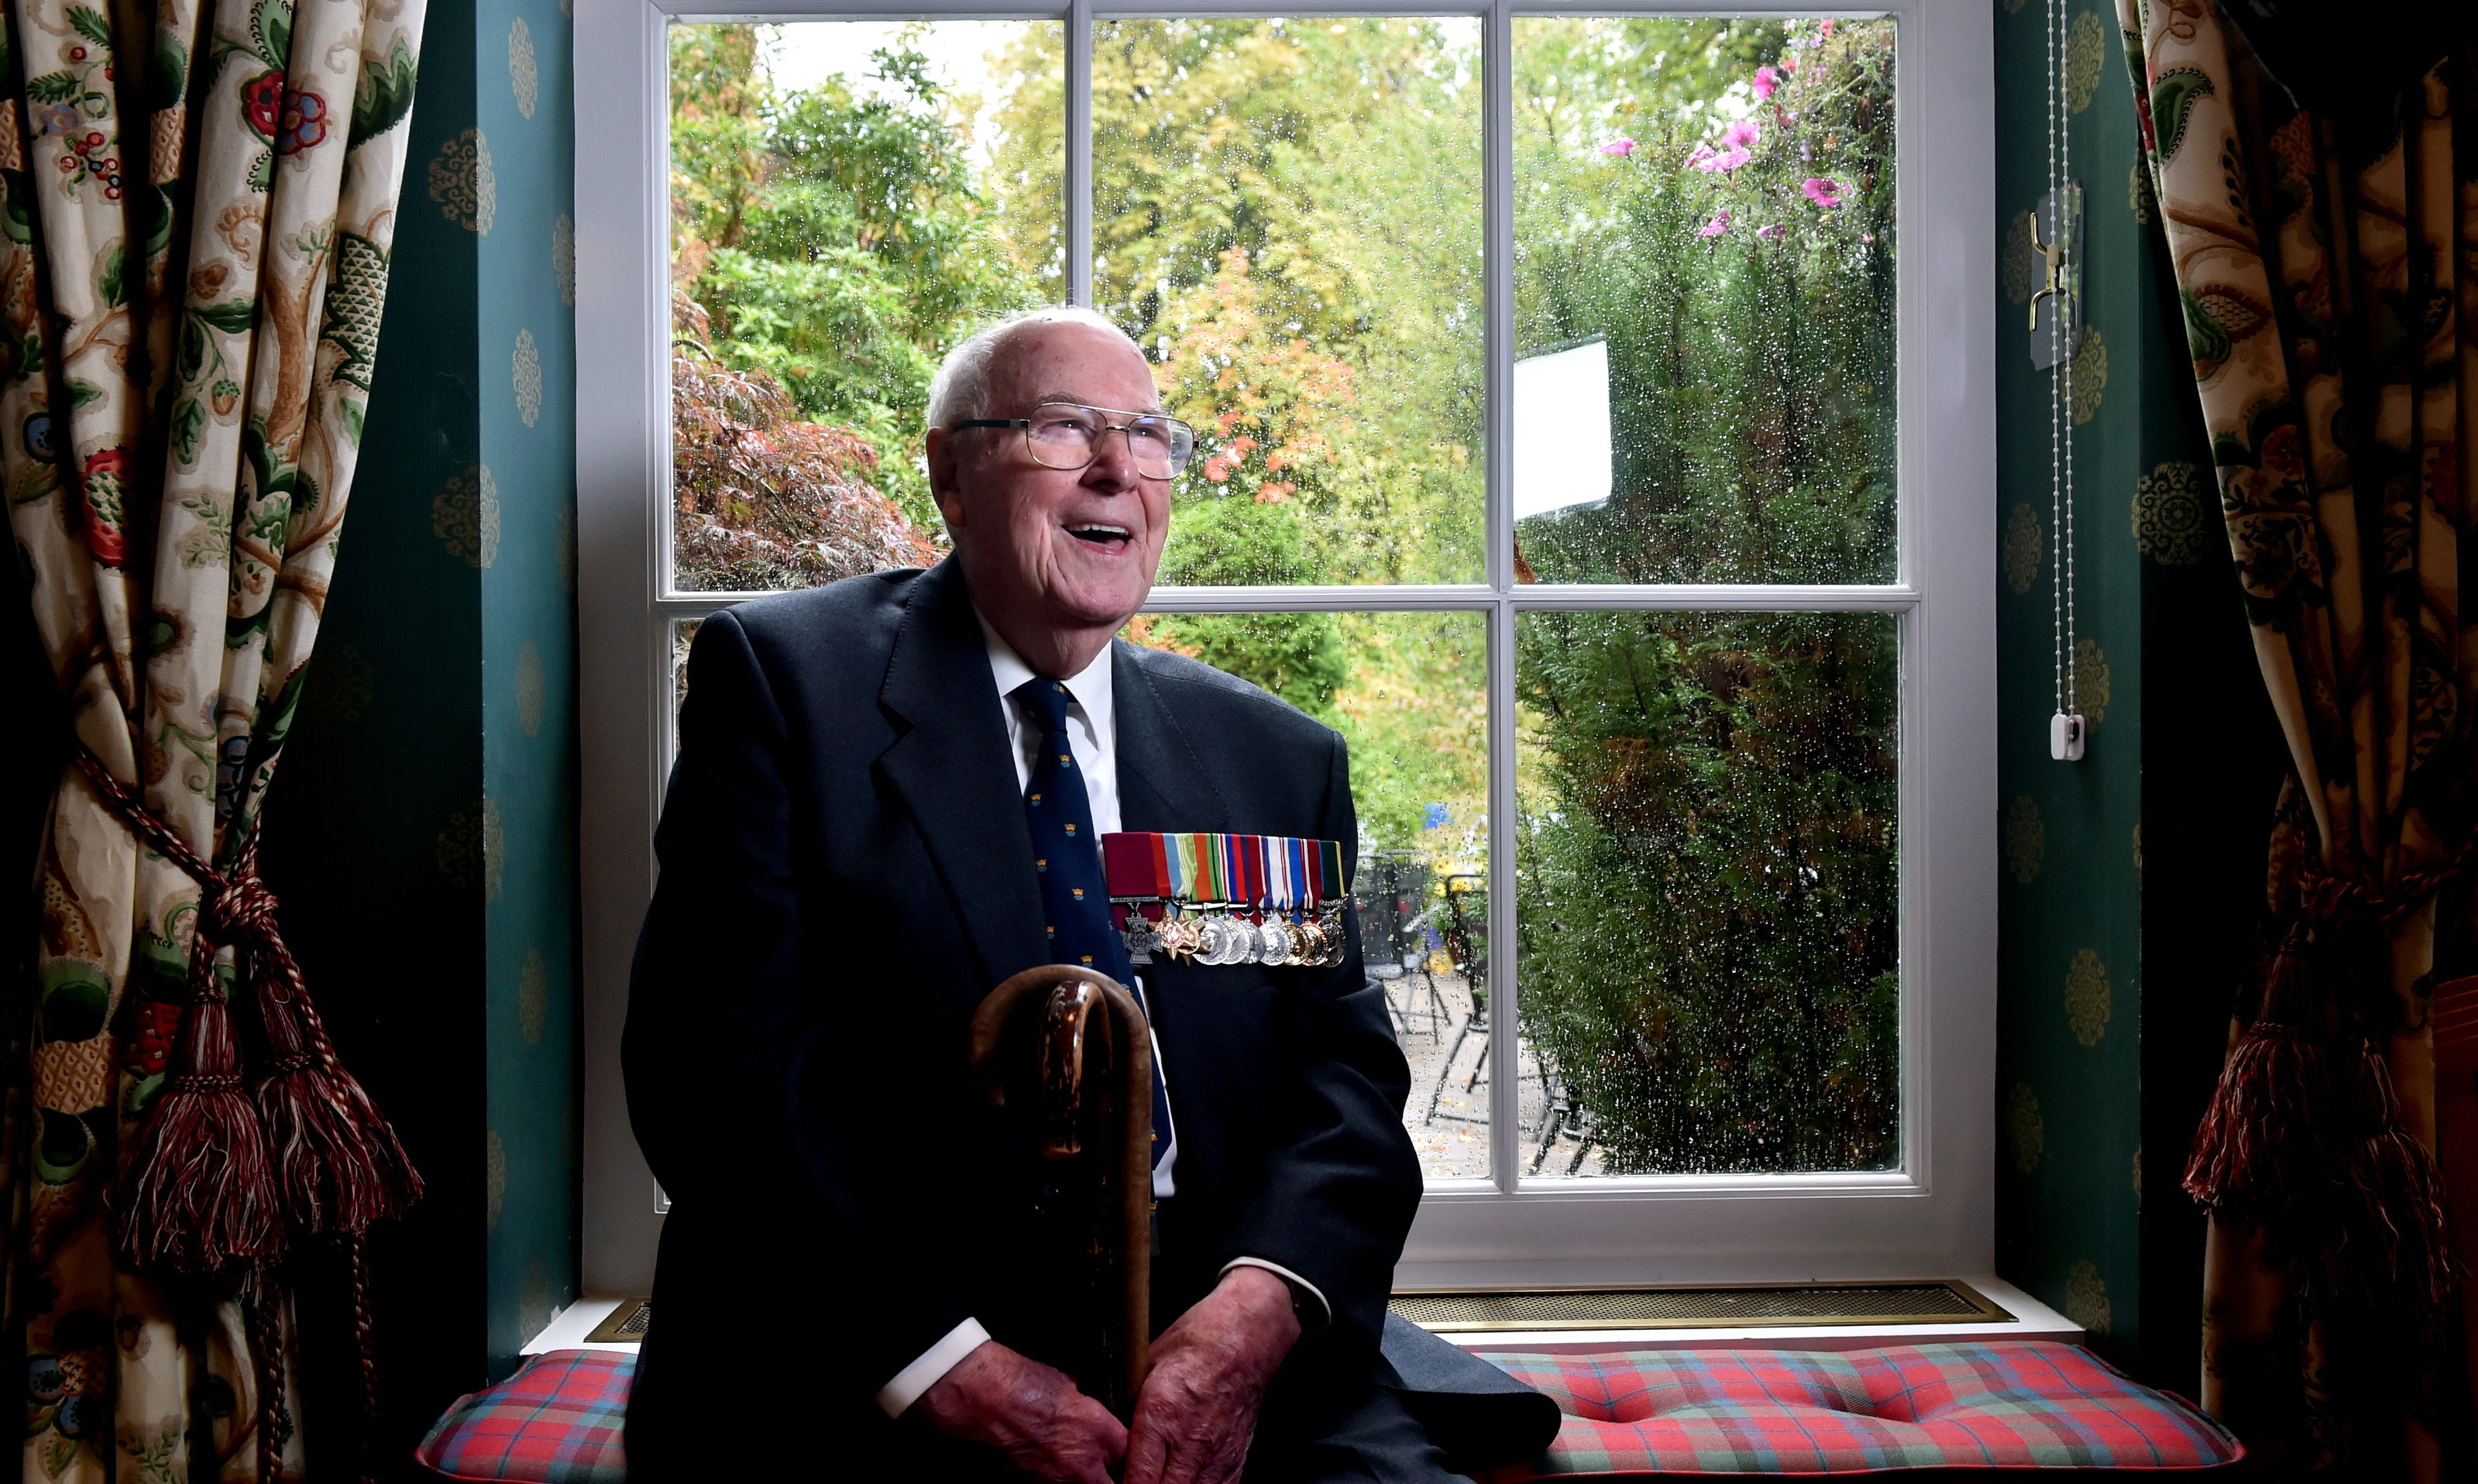 John Alexander Cruickshank from Aberdeen is Britain's oldest surviving VC recipient.